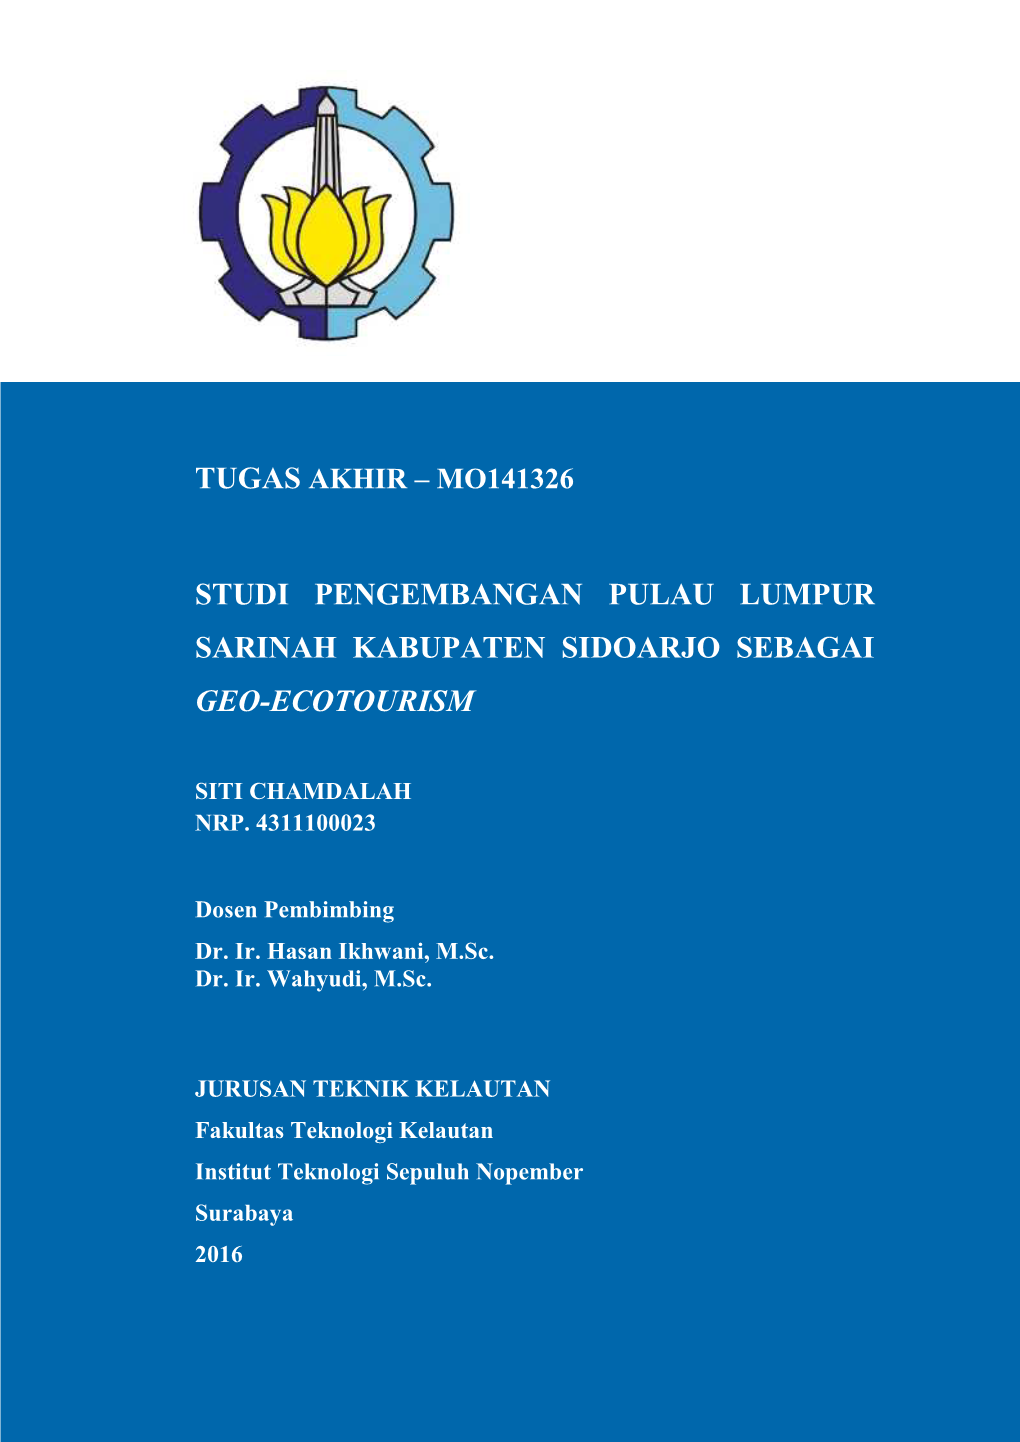 Mo141326 Studi Pengembangan Pulau Lumpur Sarinah Kabupaten